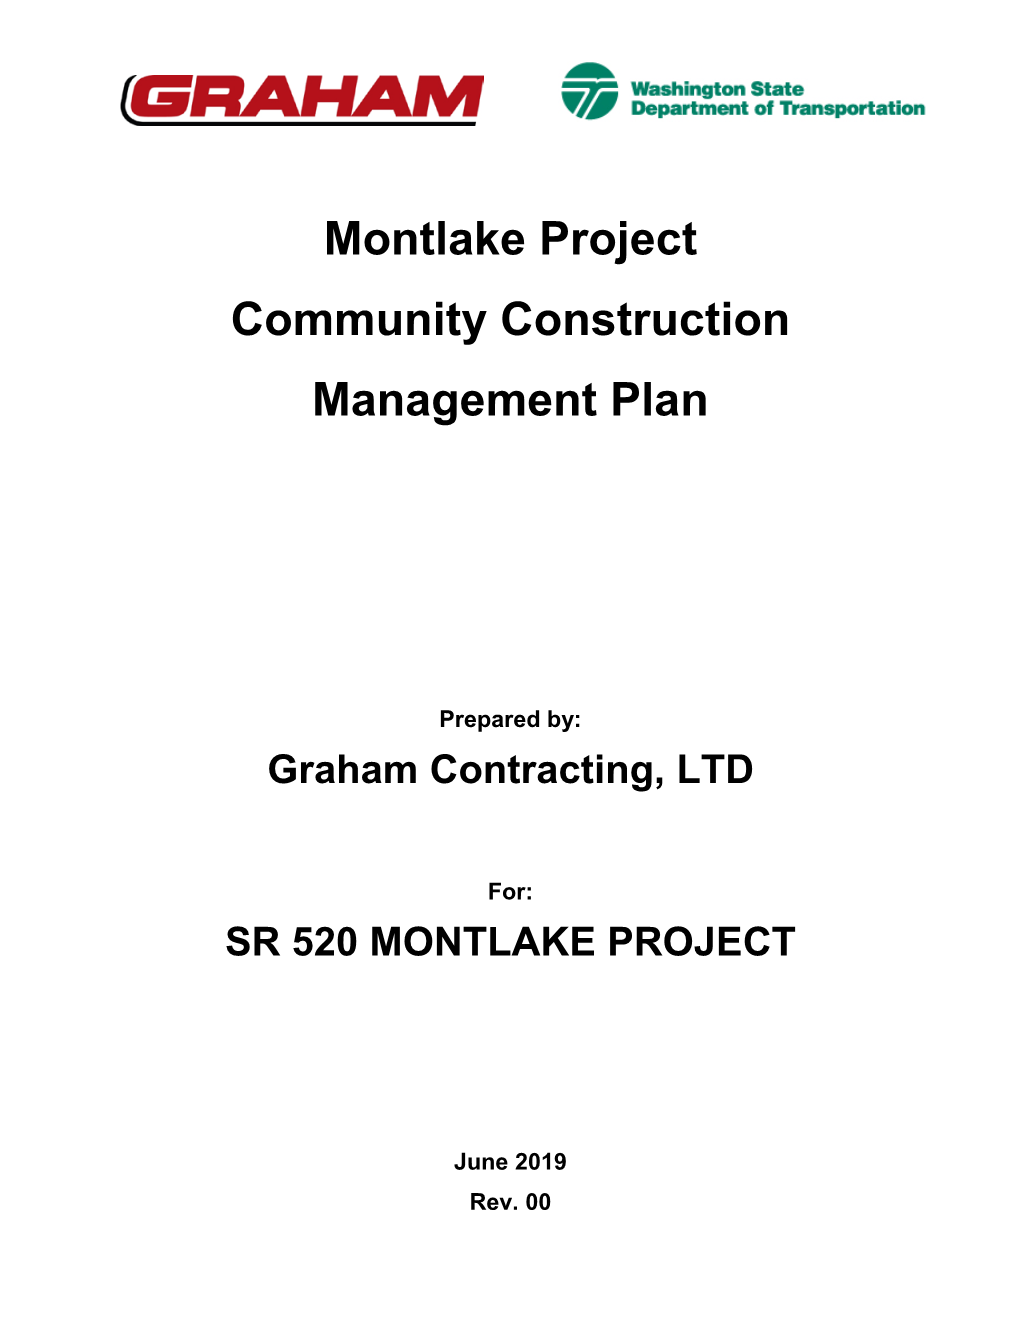 WSDOT SR 520 Bridge Replacement and HOV Program Montlake Project